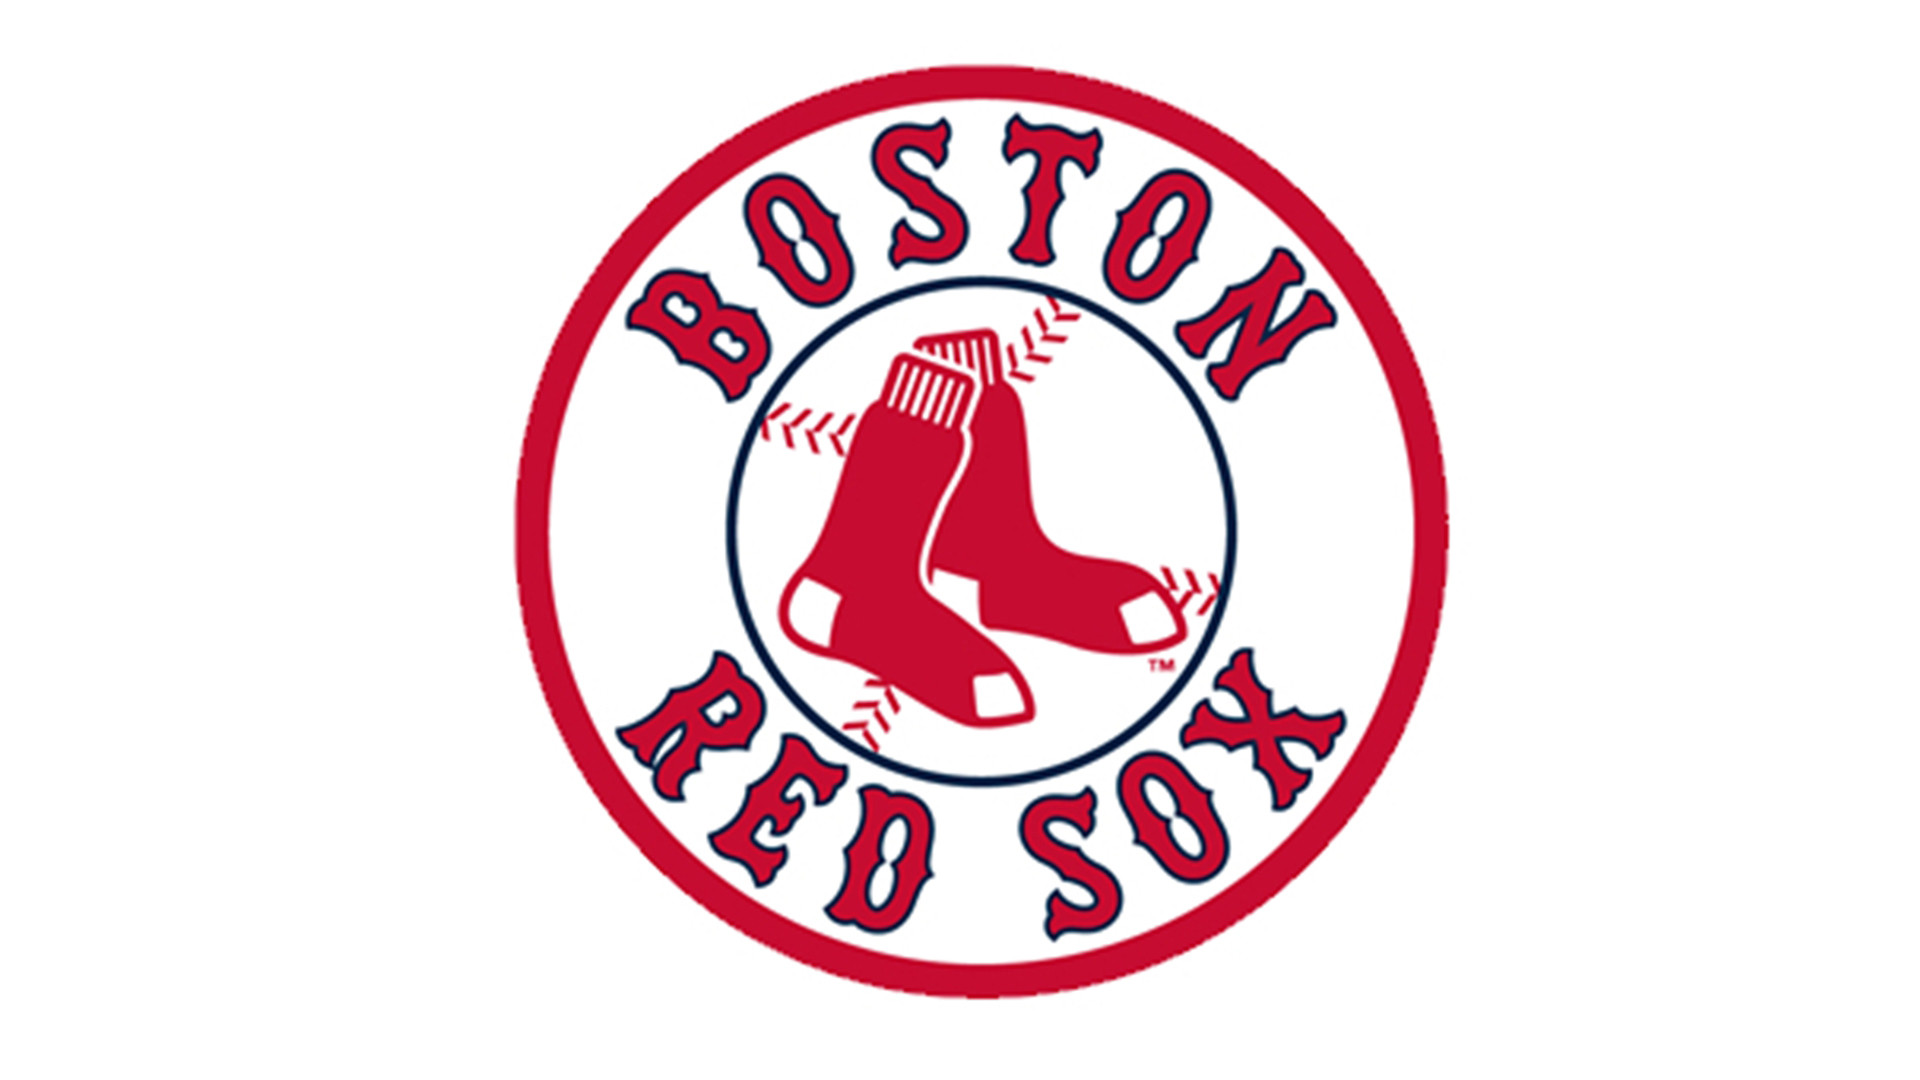 Boston Redsox Red Sox Logo Wallpaper #2542 – Resolution 1366×768 px | Red  Sox Wallpaper | Pinterest | Red socks